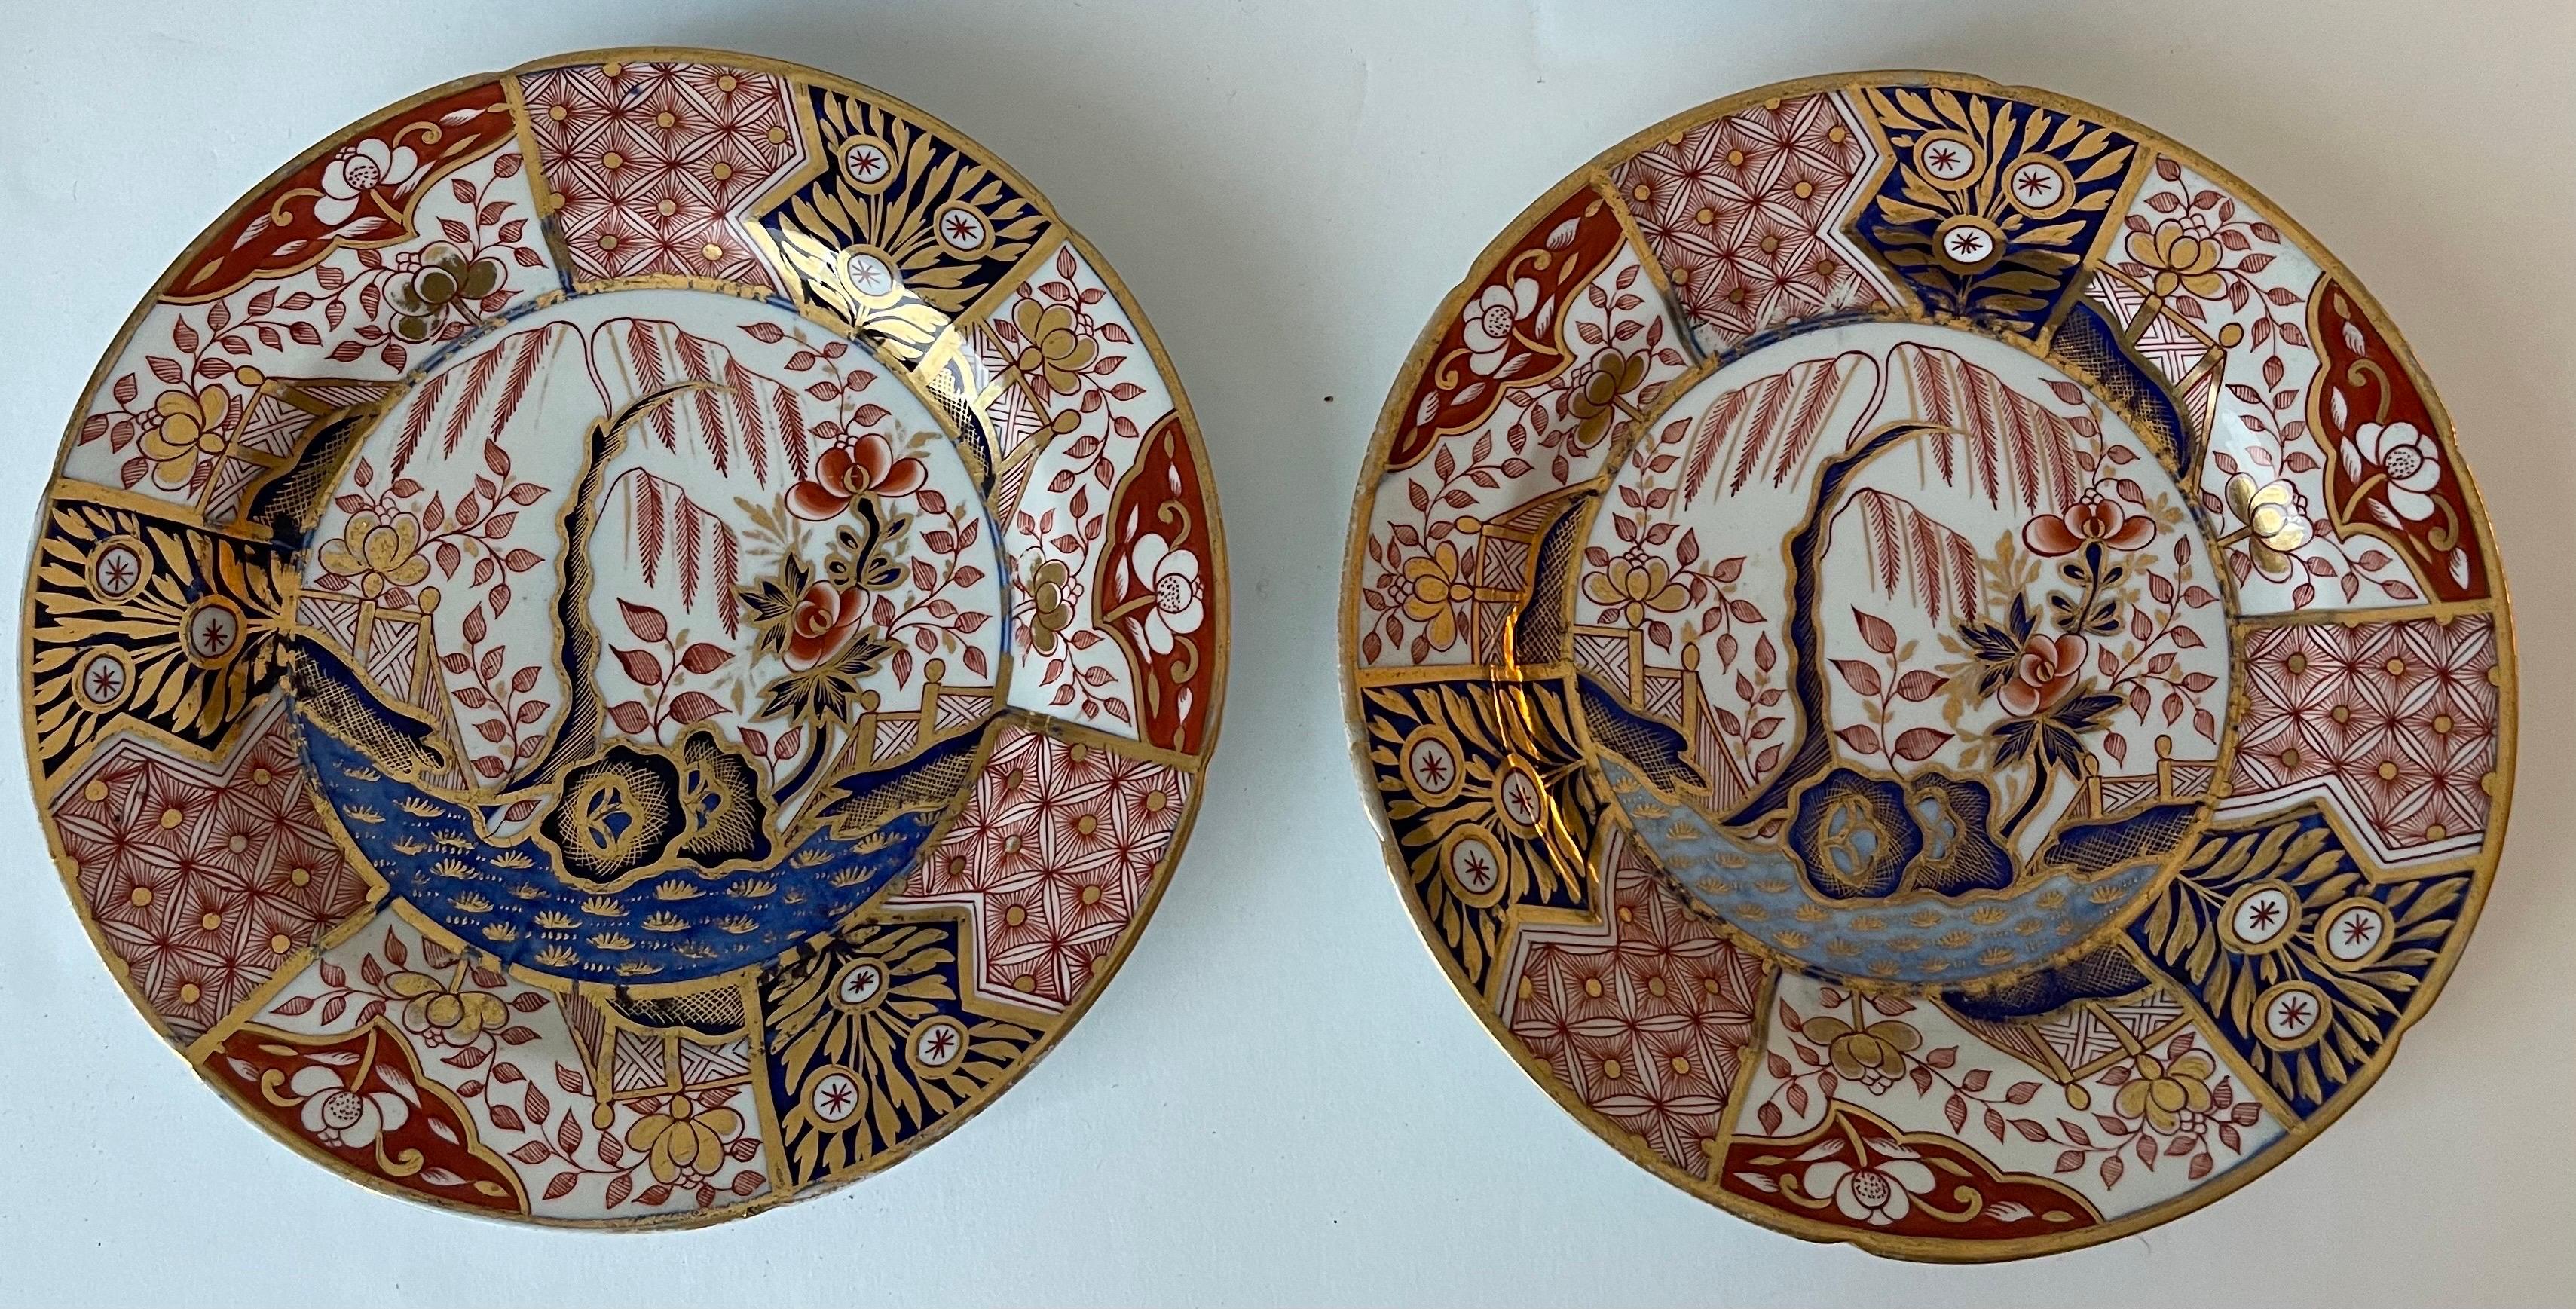 Set of four antique Coalport money tree pattern cabinet plates or dessert plates. Hand painted, richly detailed design. 
Each plate measures 8.25” diameter. 